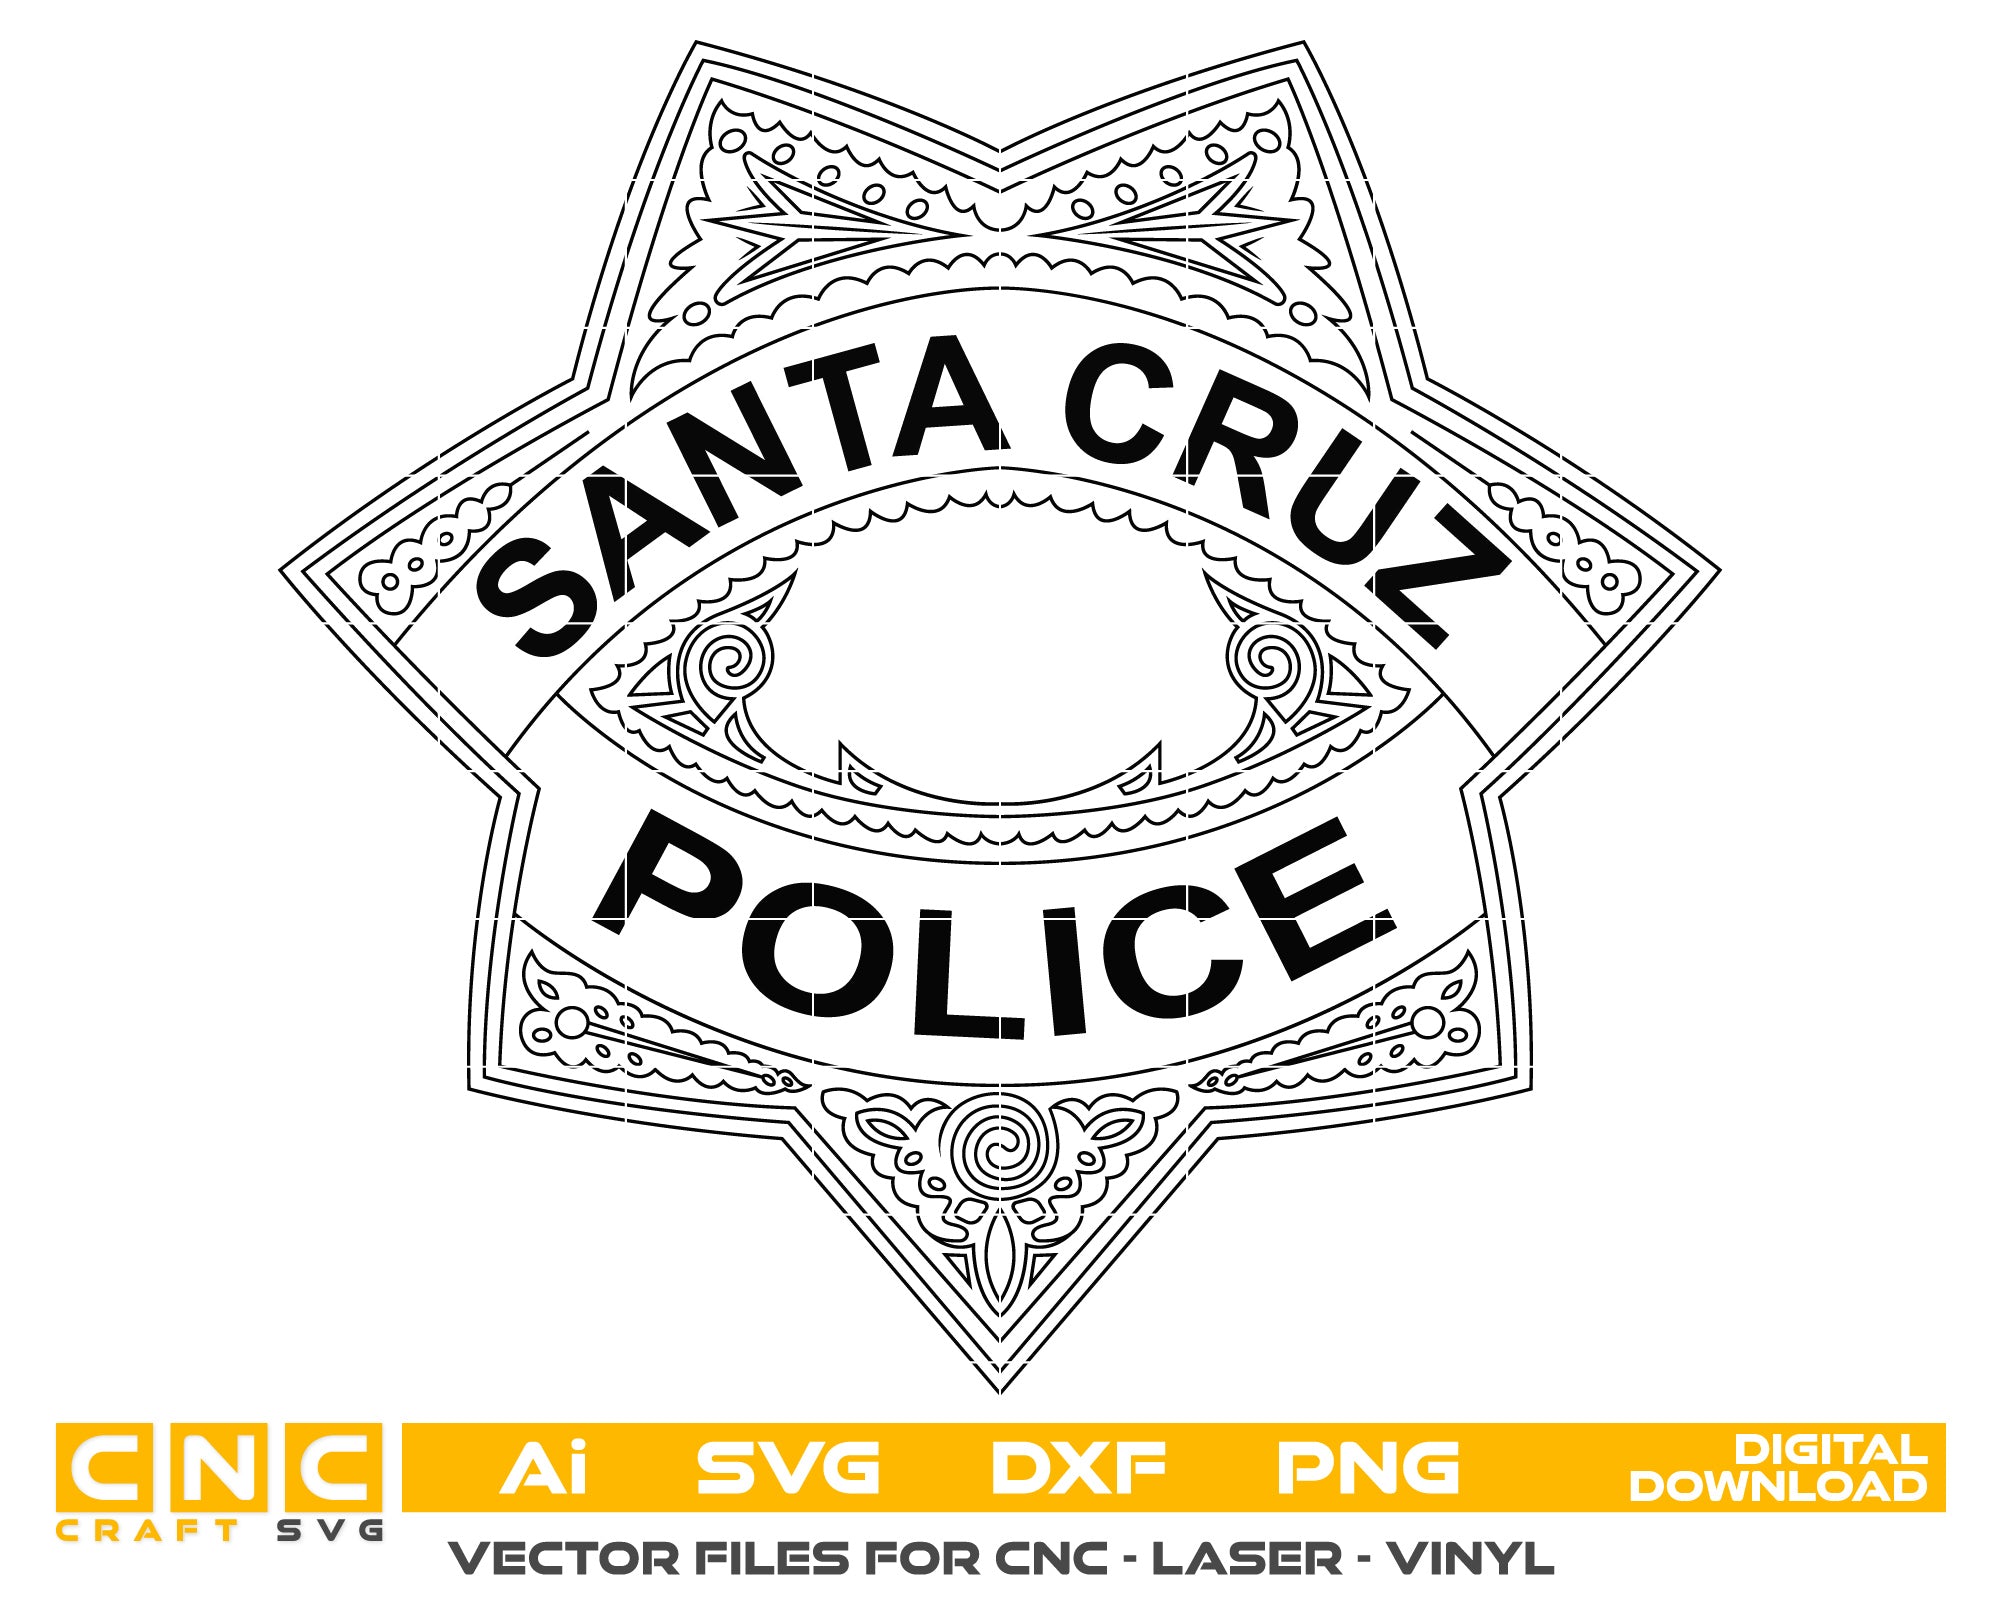 Santa Cruz Police Badge vector art